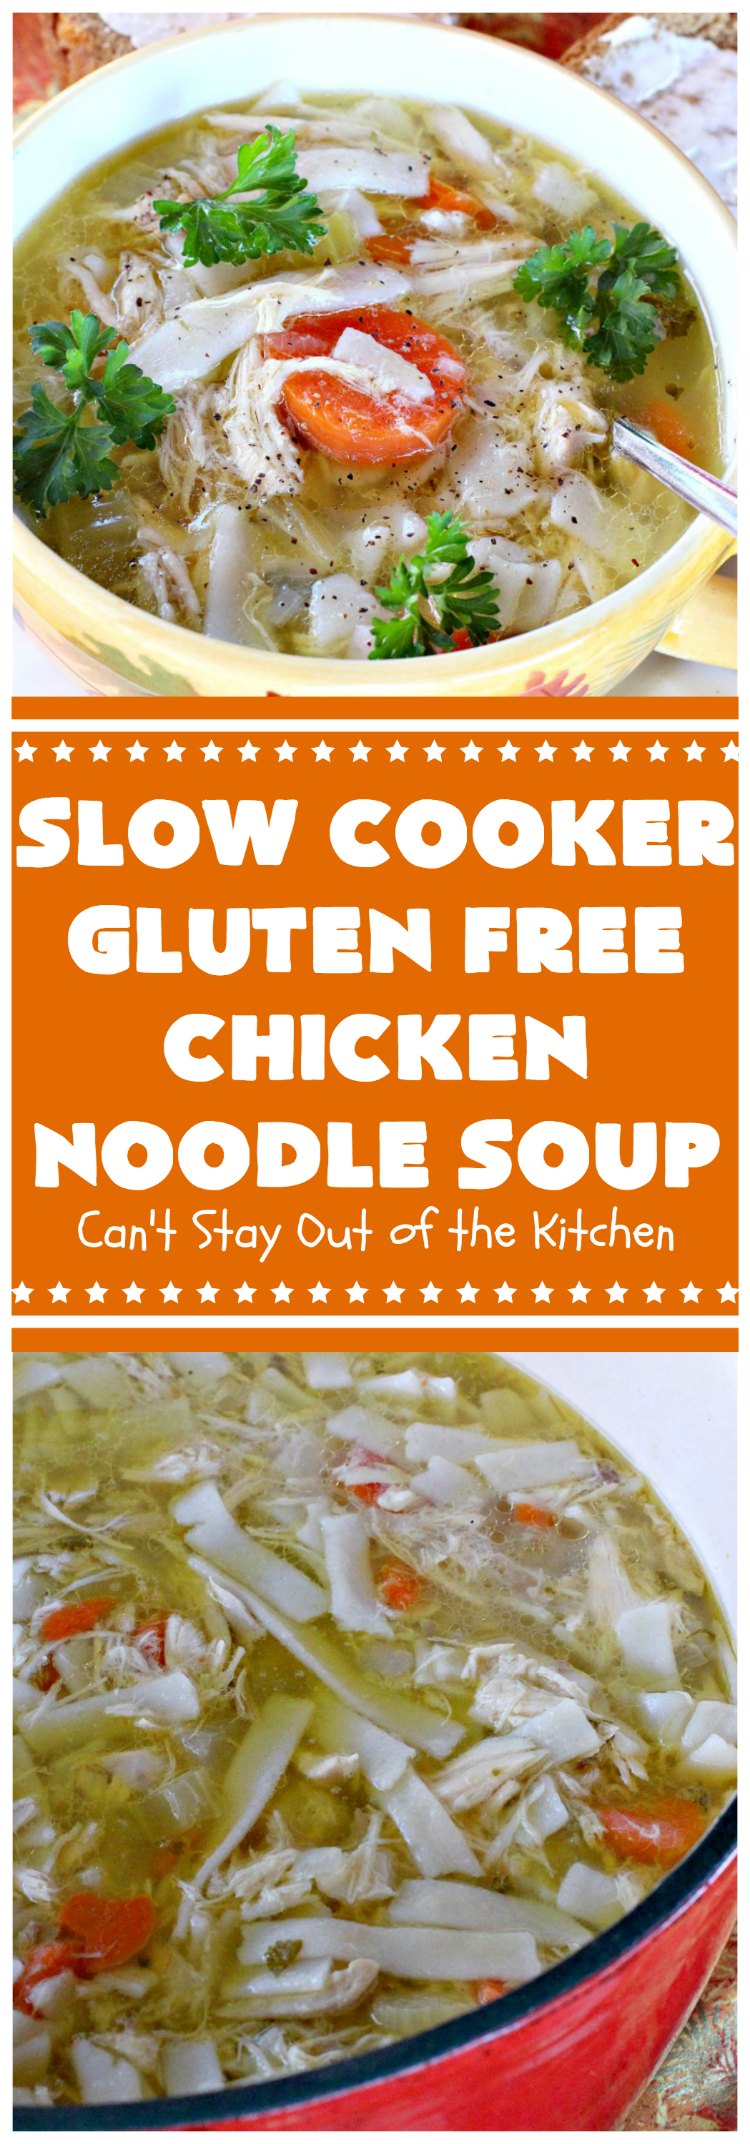 Hearty Gluten Free Chicken Noodle Soup in the Slow Cooker - Gluten